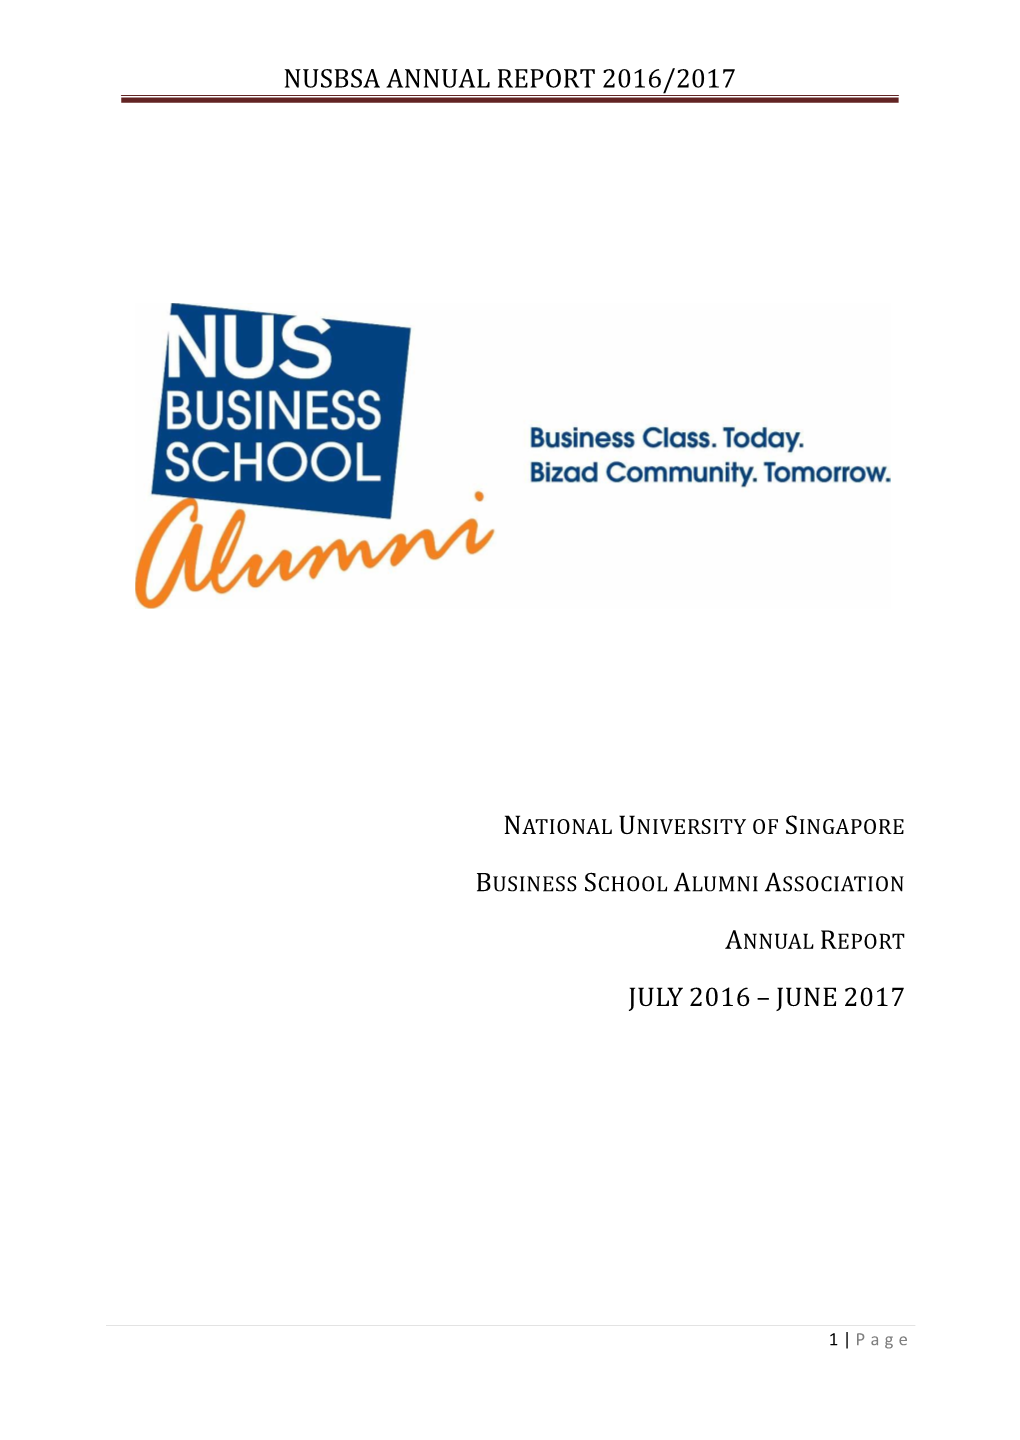 Nusbsa Annual Report 2016/2017 July 2016 – June 2017